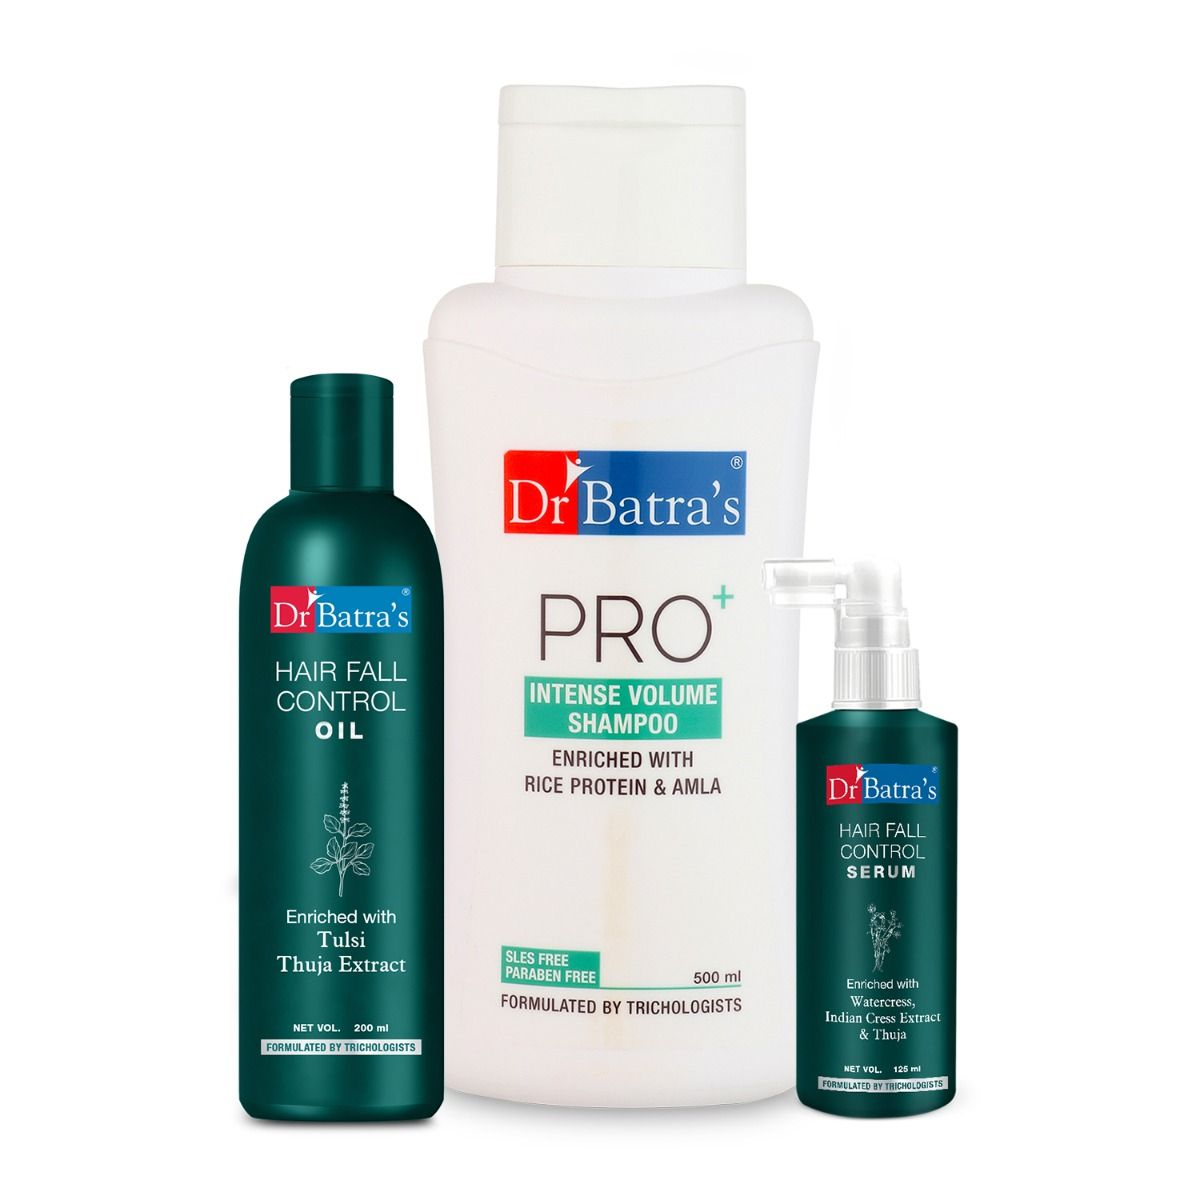     			Dr Batra's Hair Fall Control Serum, Pro+ Intense Volume Shampoo And Hair Fall Control Oilpack Of 3